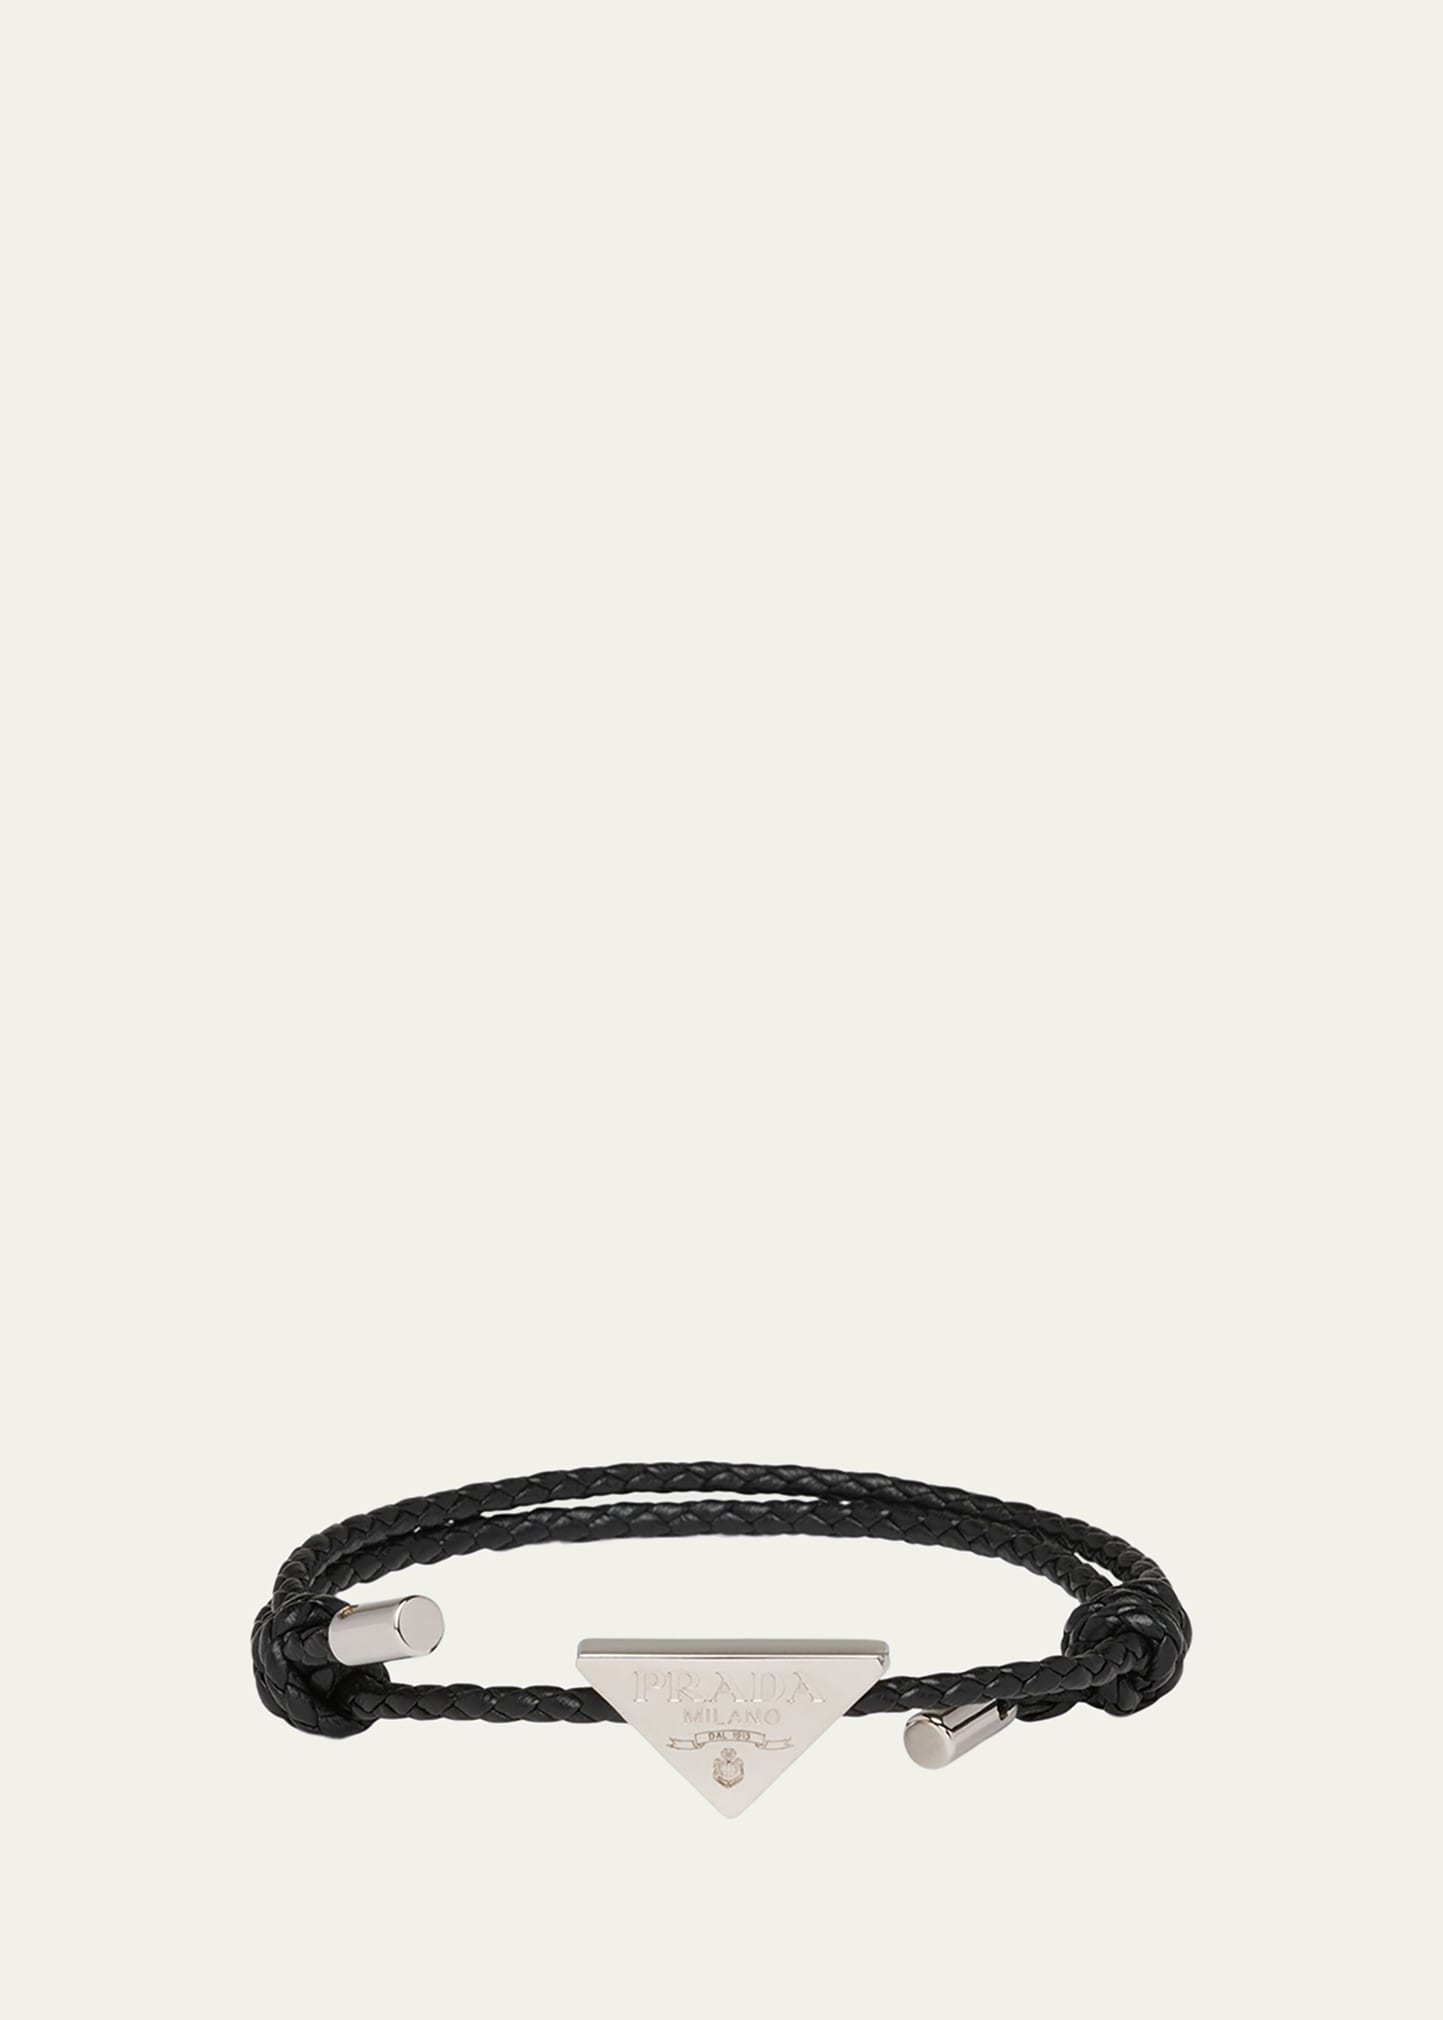 Prada Men's Elasticized Nylon Bracelet